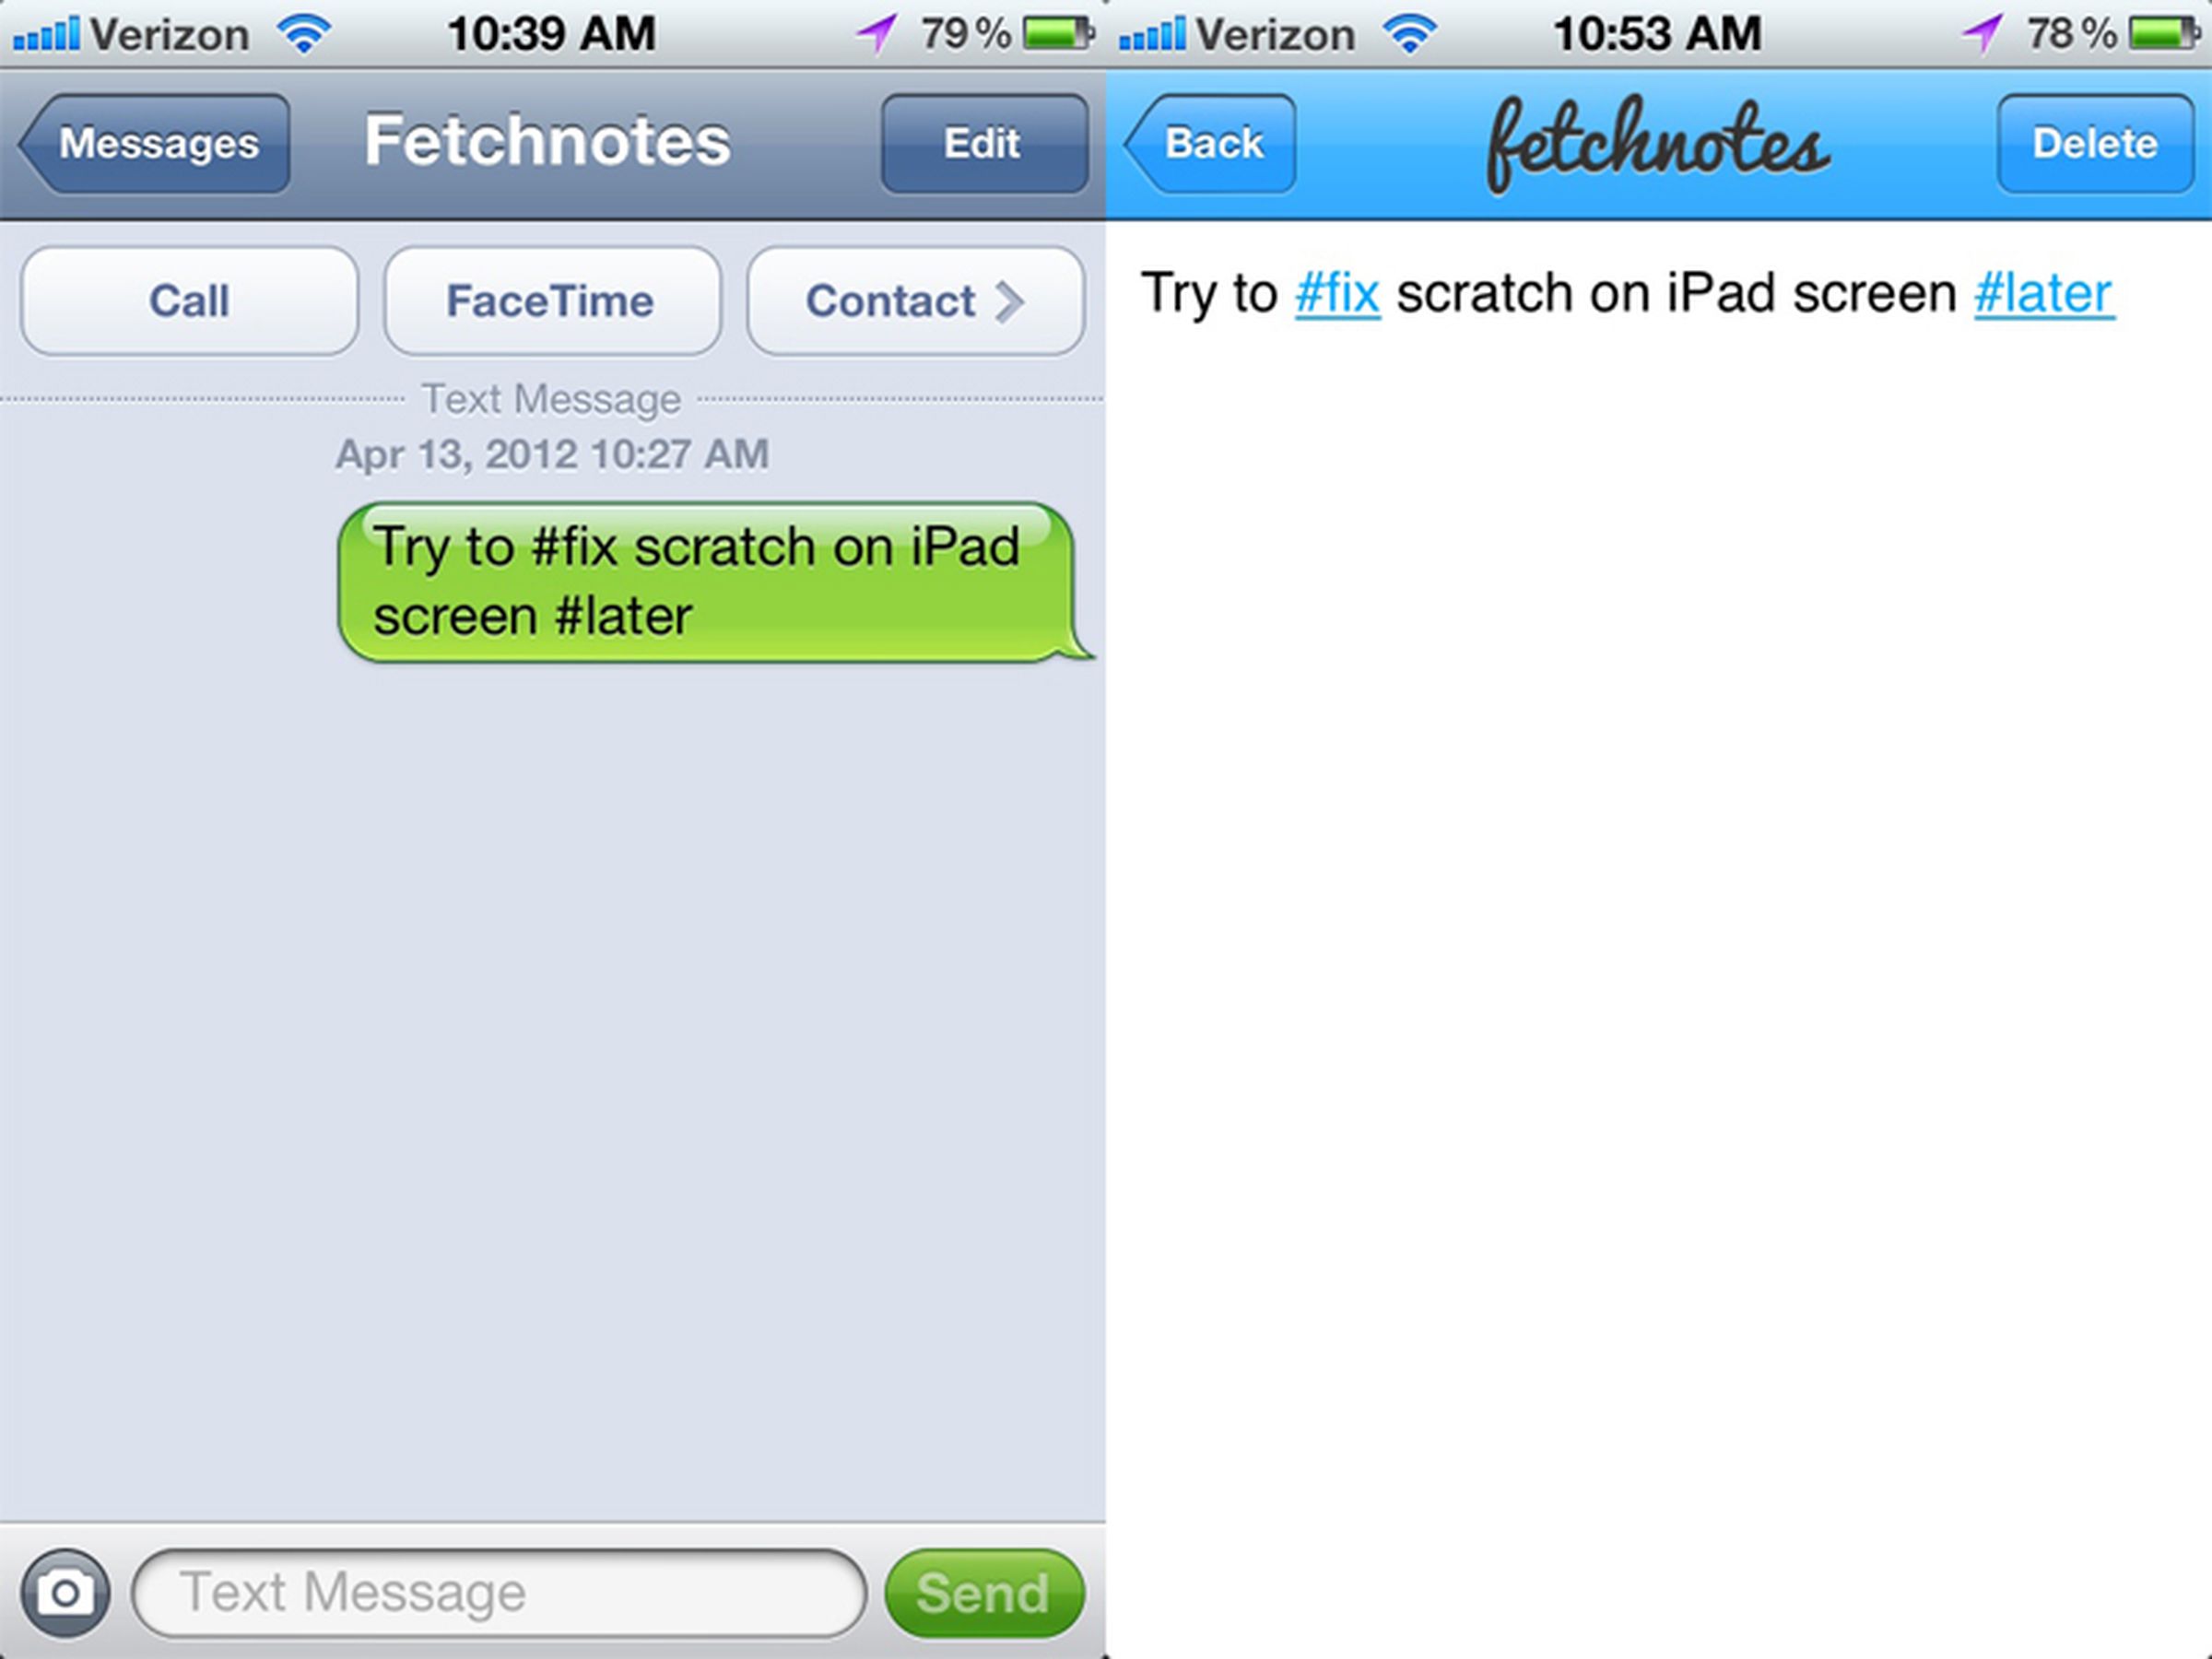 Fetchnotes screenshots